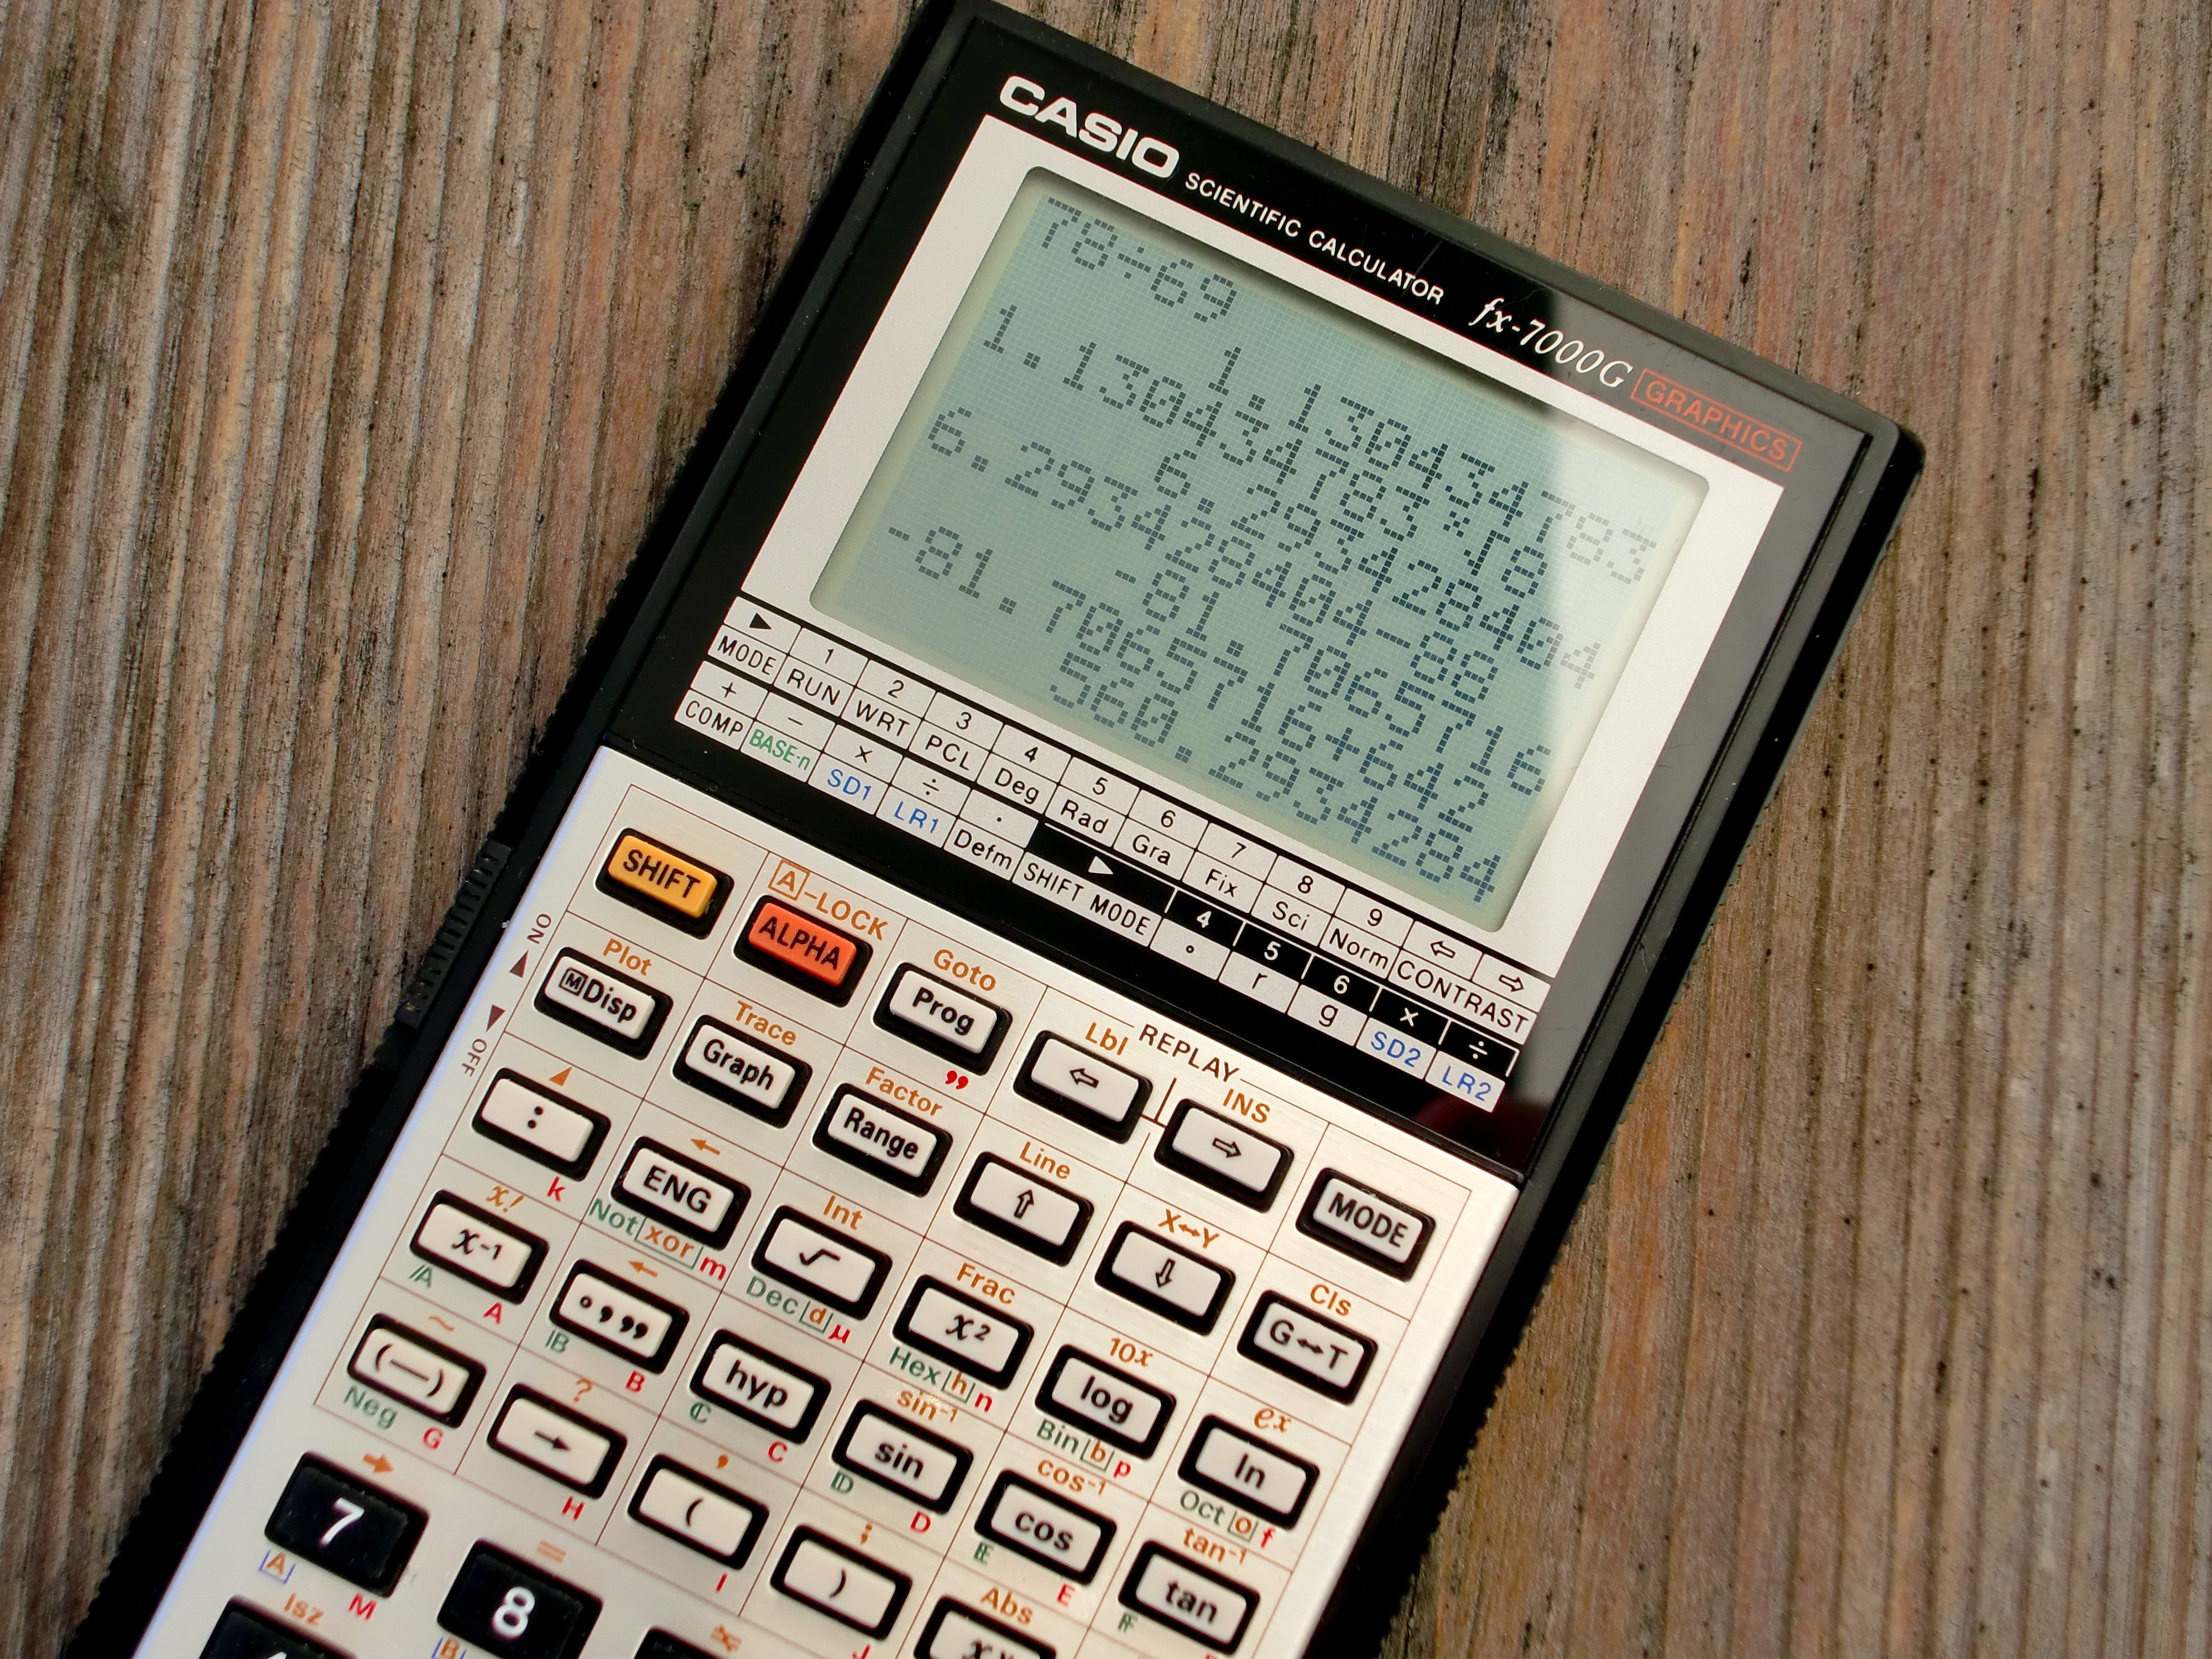 Black and grey casio scientific calculator showing formula photo